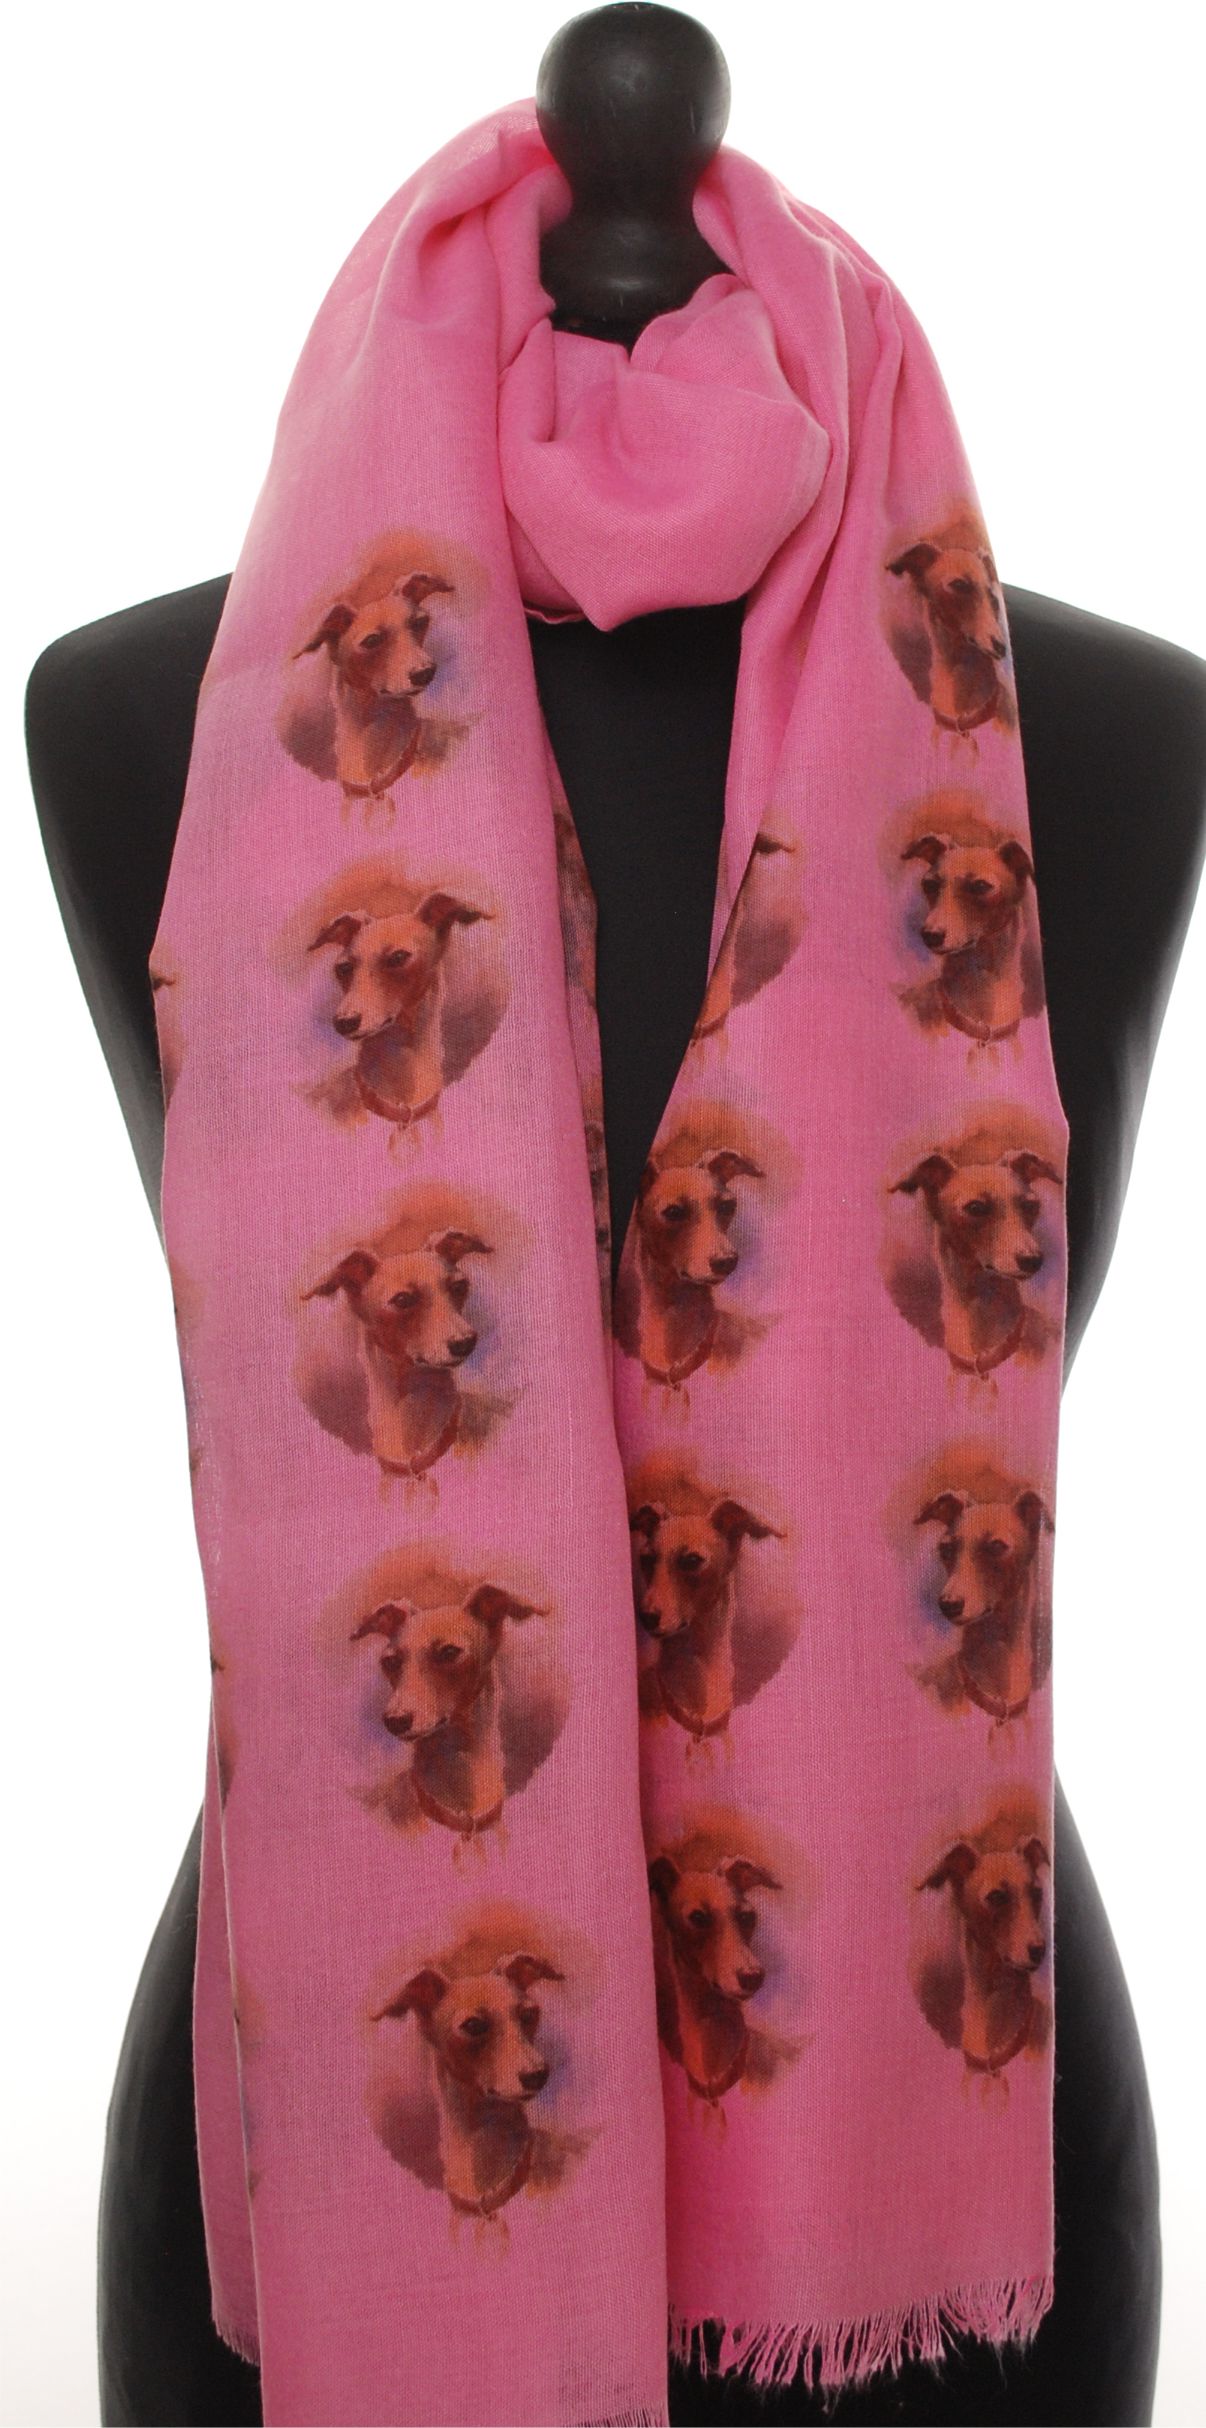 Italian Greyhound hand printed ladies fashion scarf